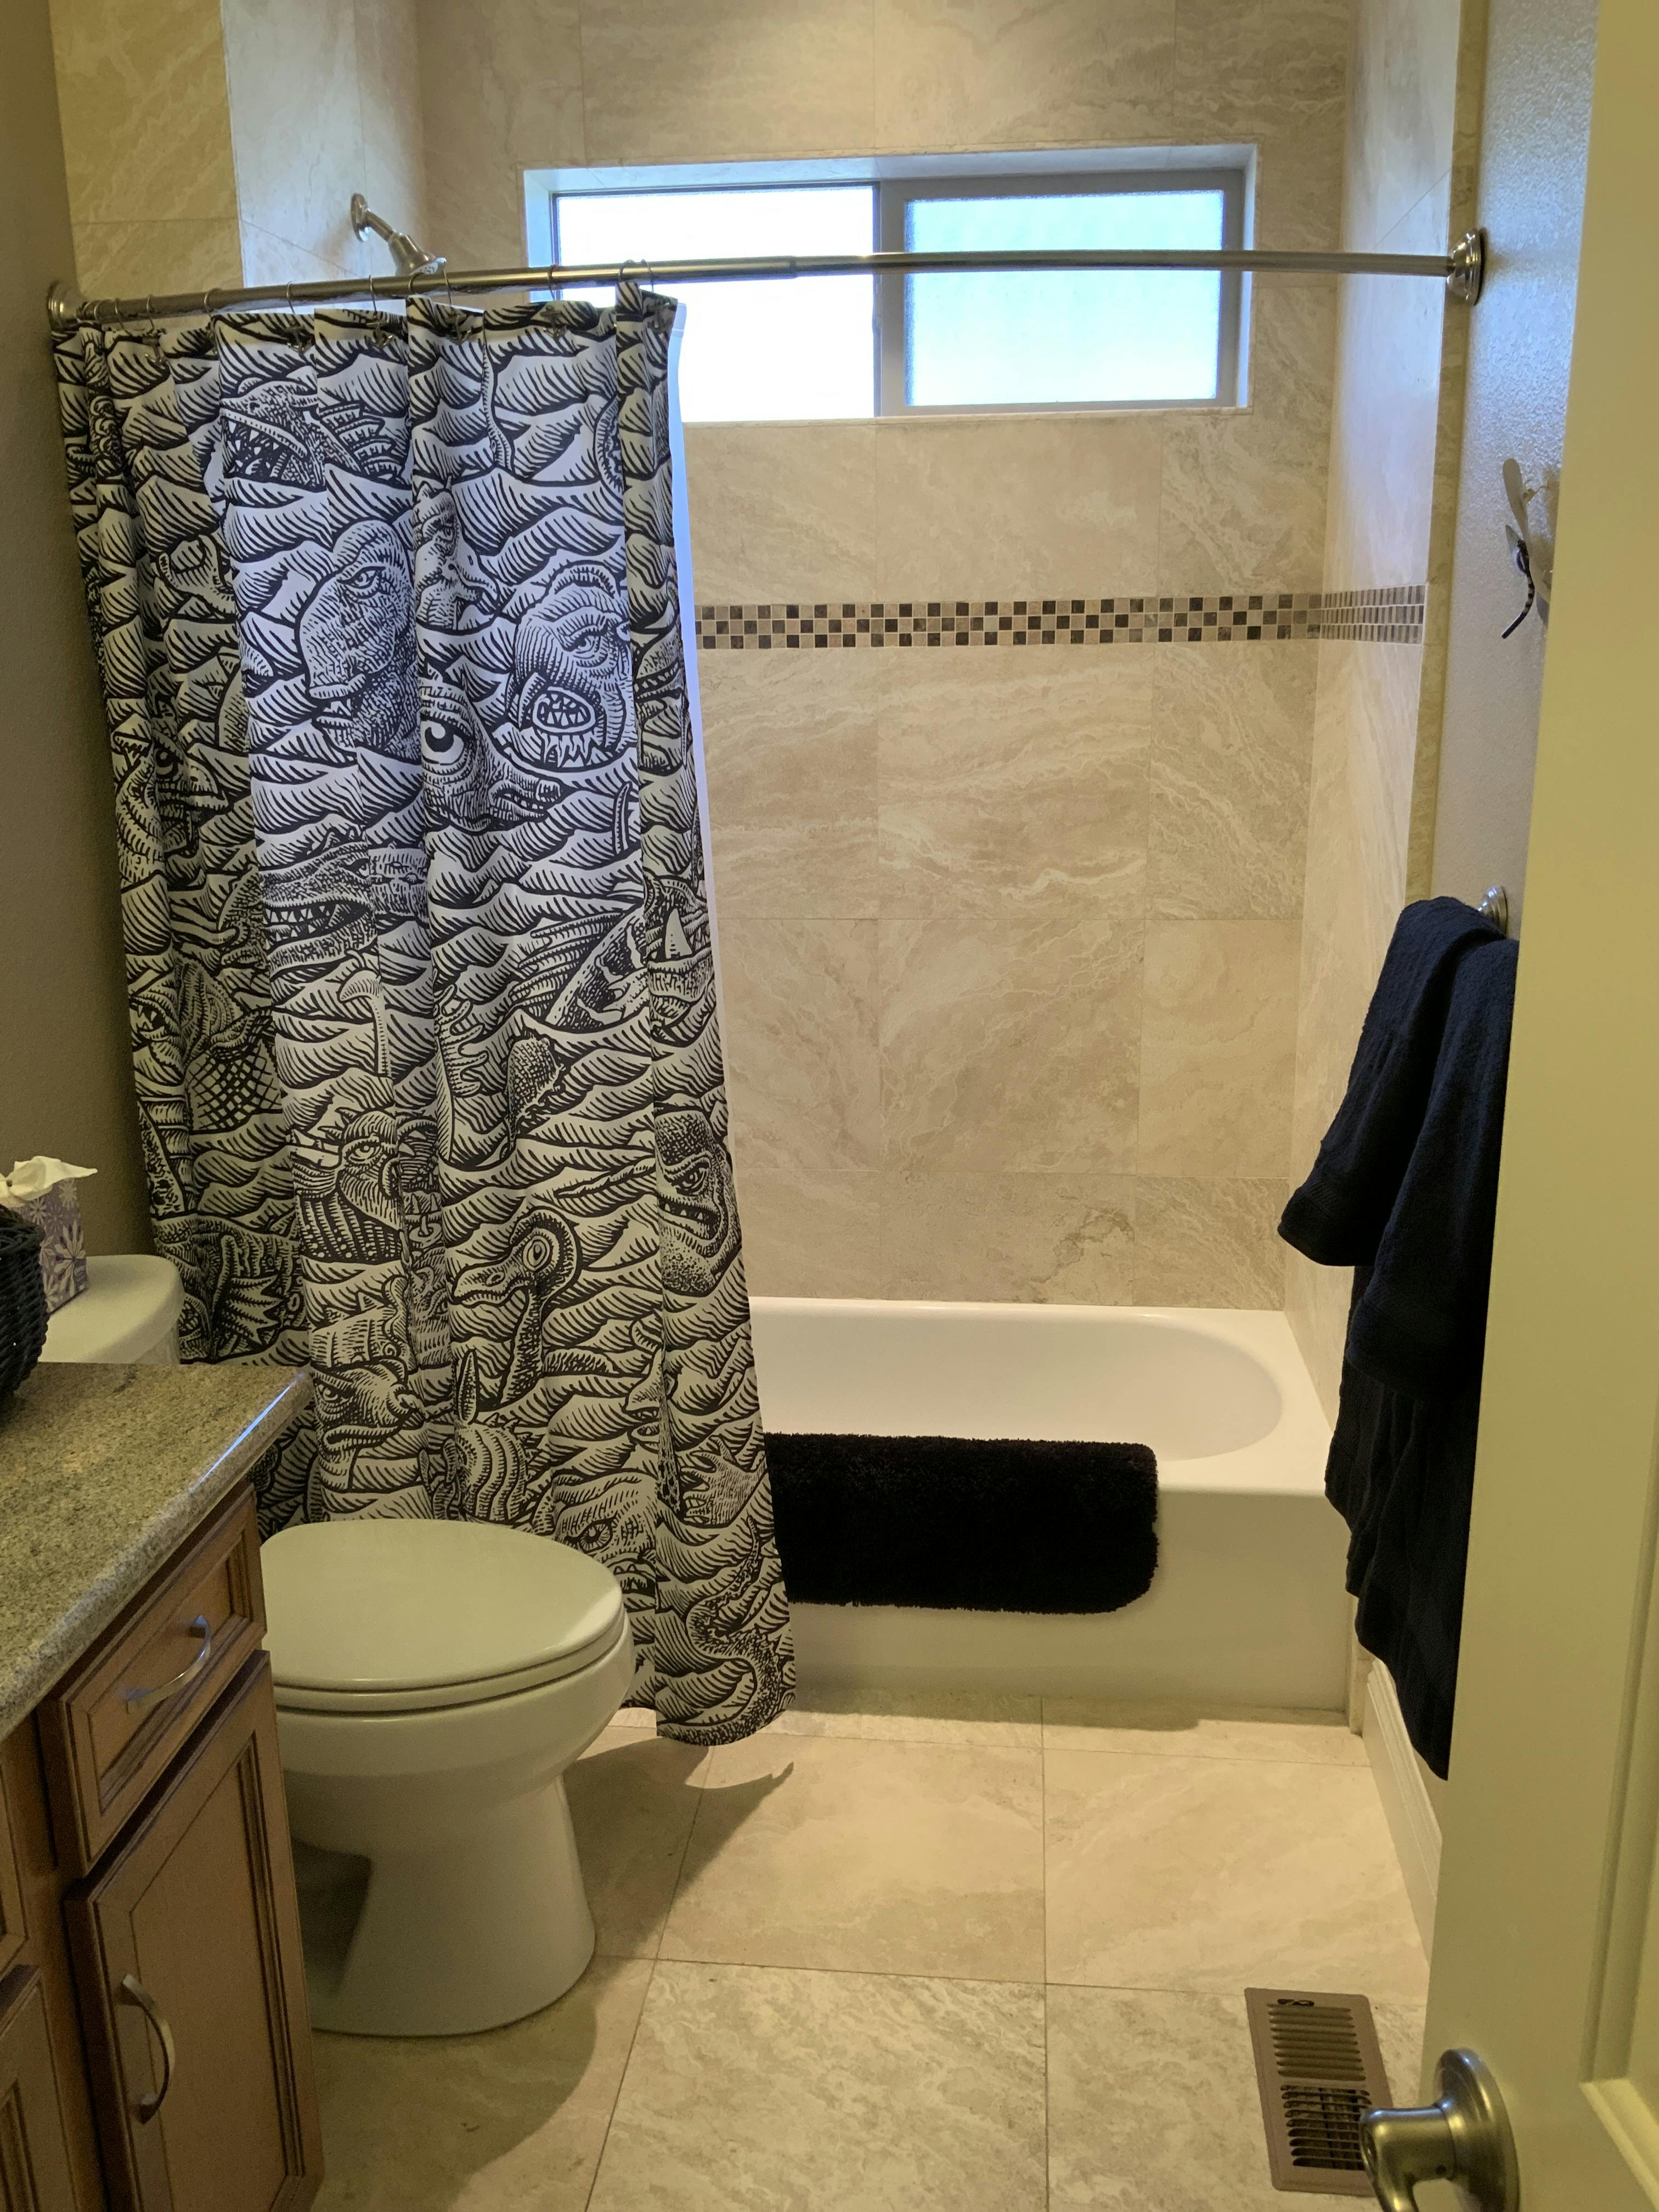 Black Cat Library Shower Curtain Bathroom Waterproof Fabric Bath Accessory Sets 